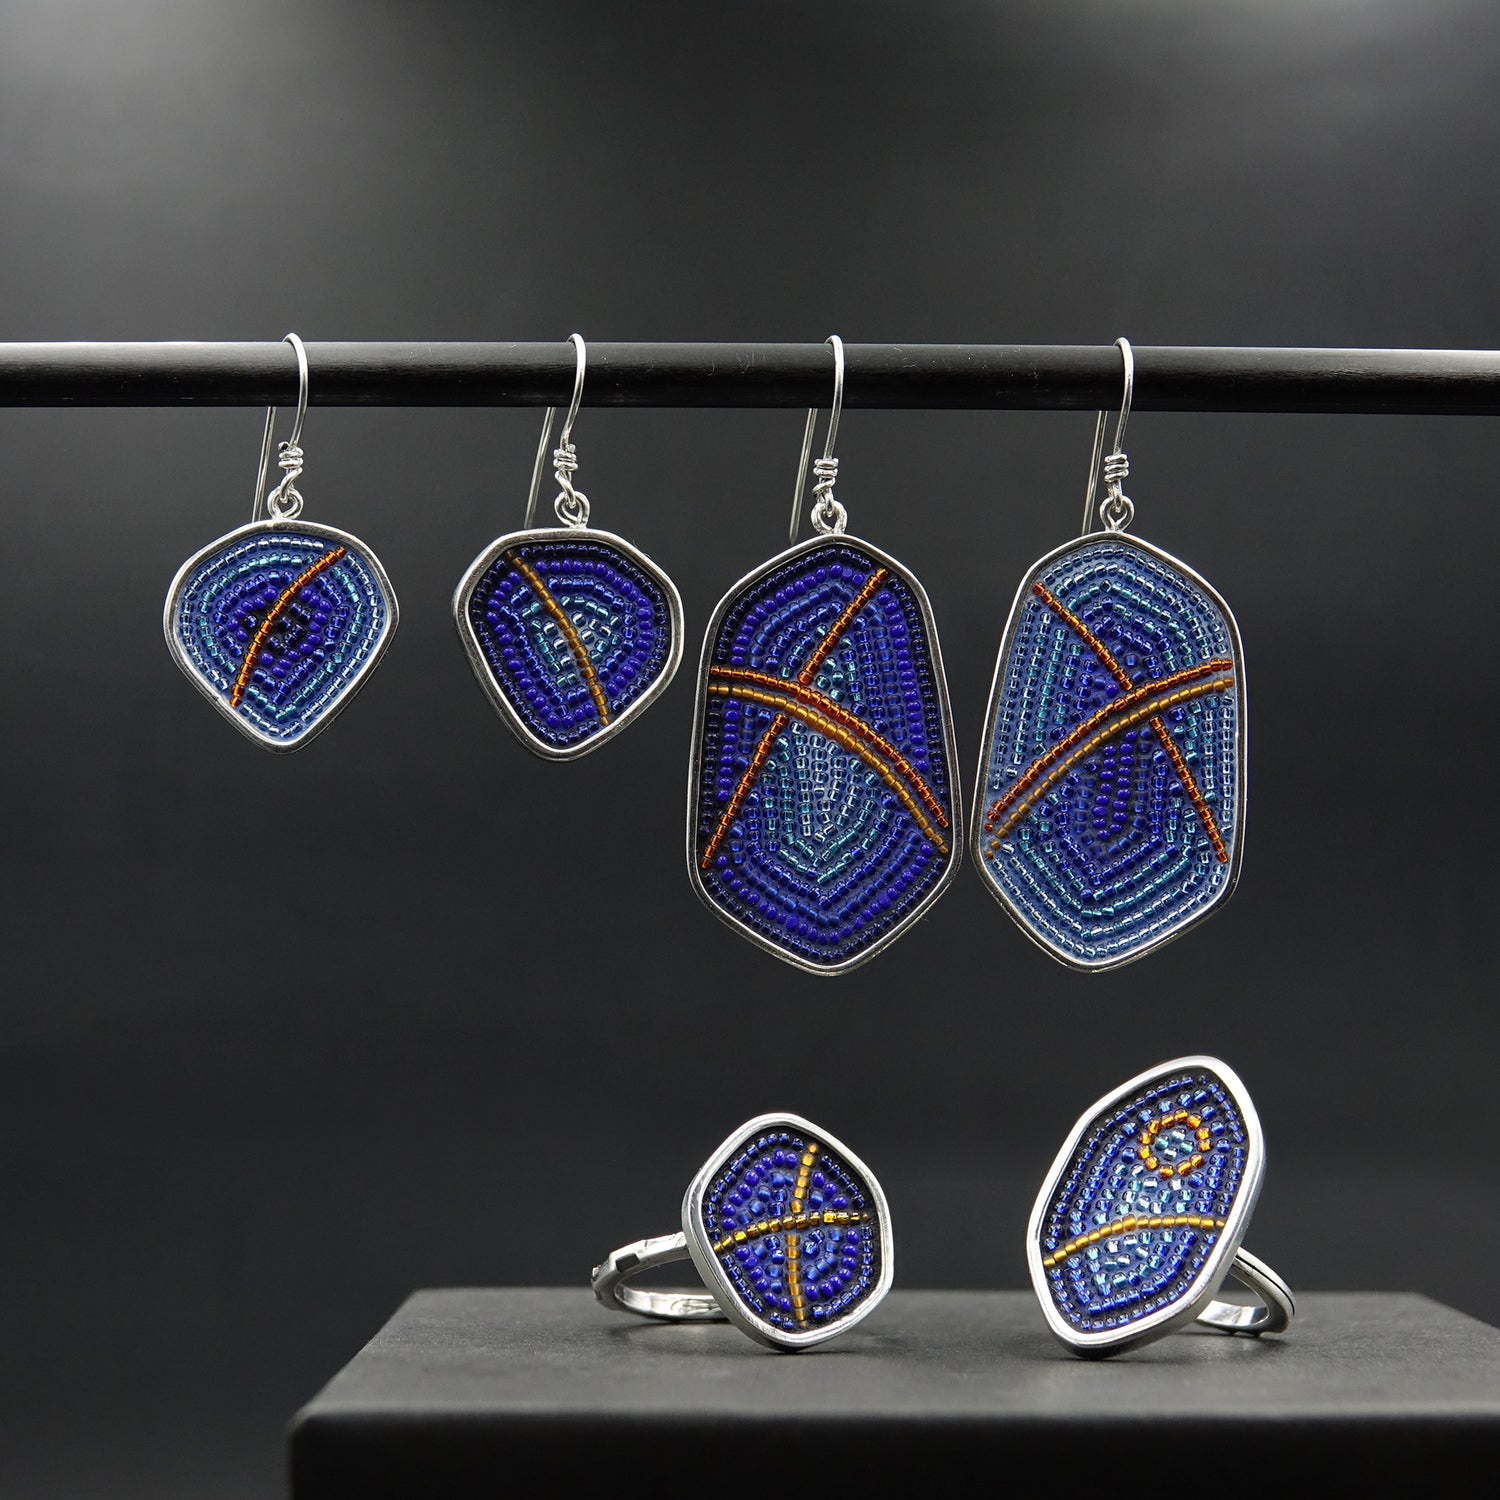 Blue micro-mosaic earrings and rings